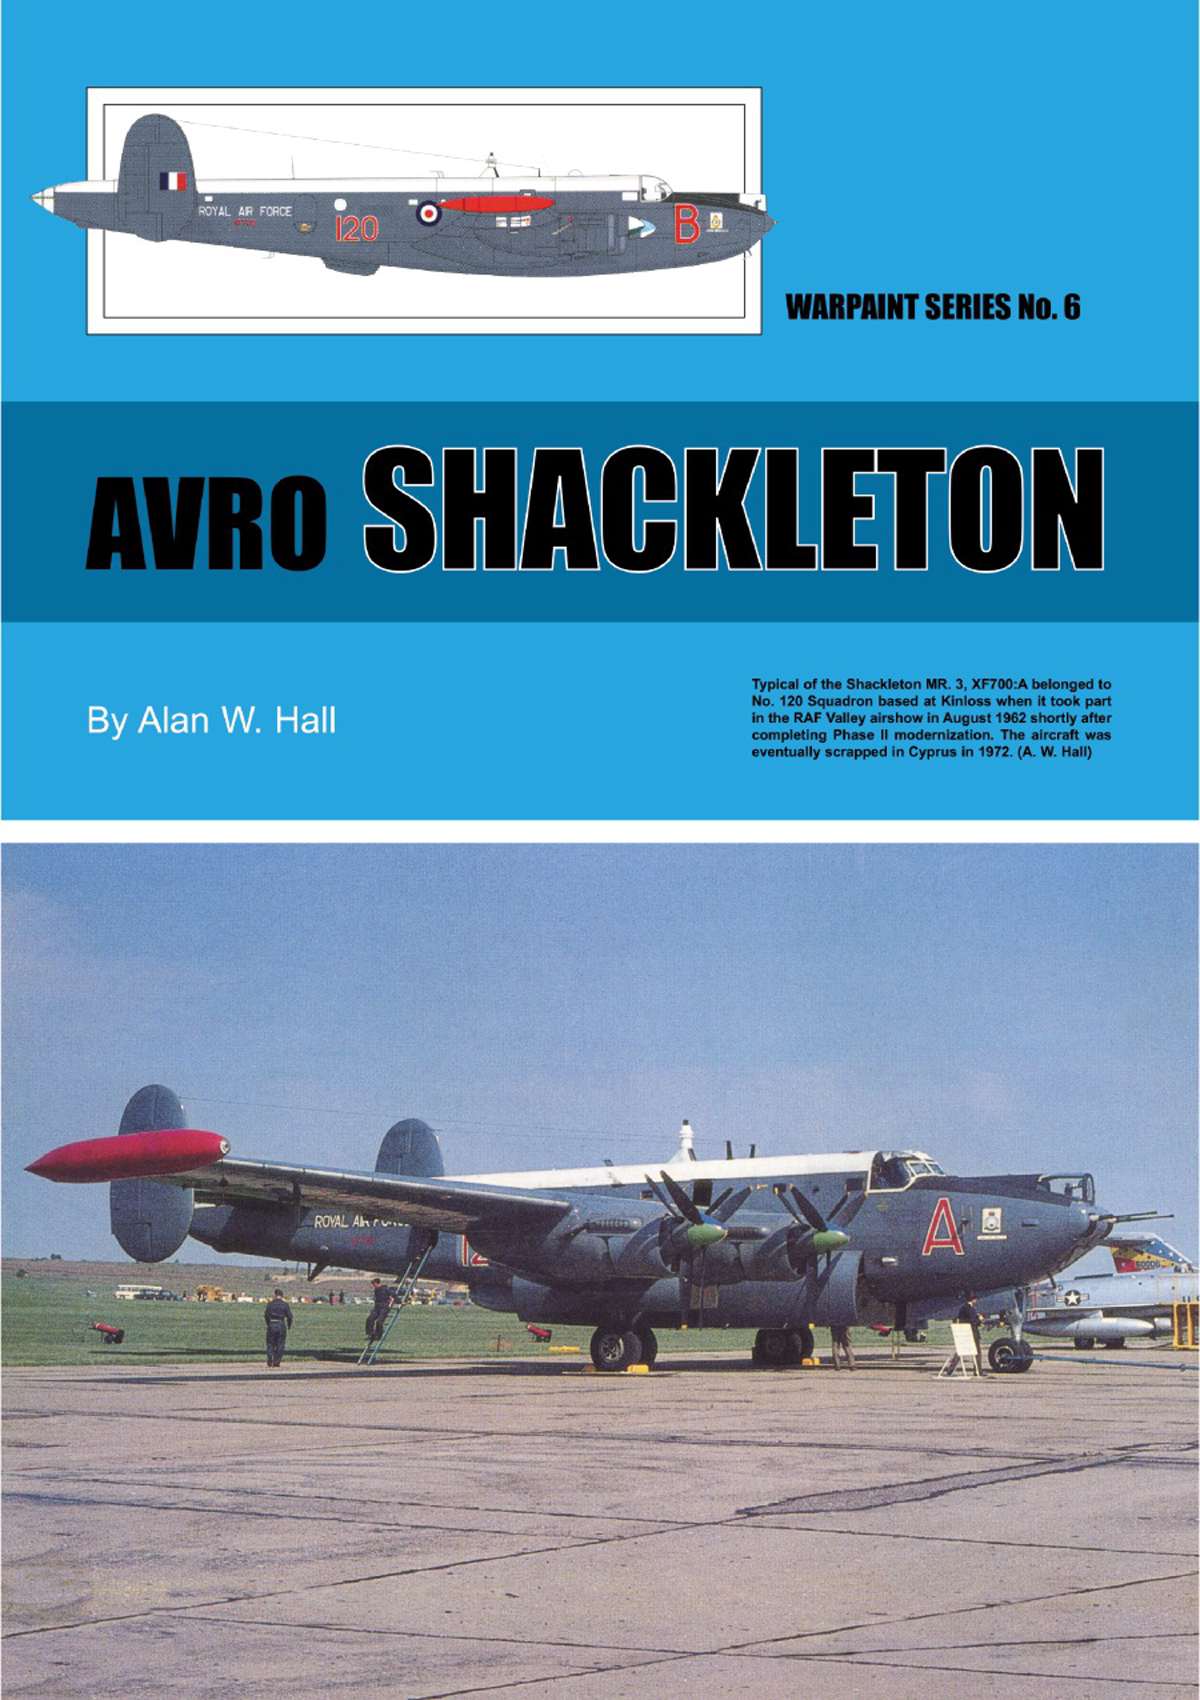 N6 - Avro Shackleton